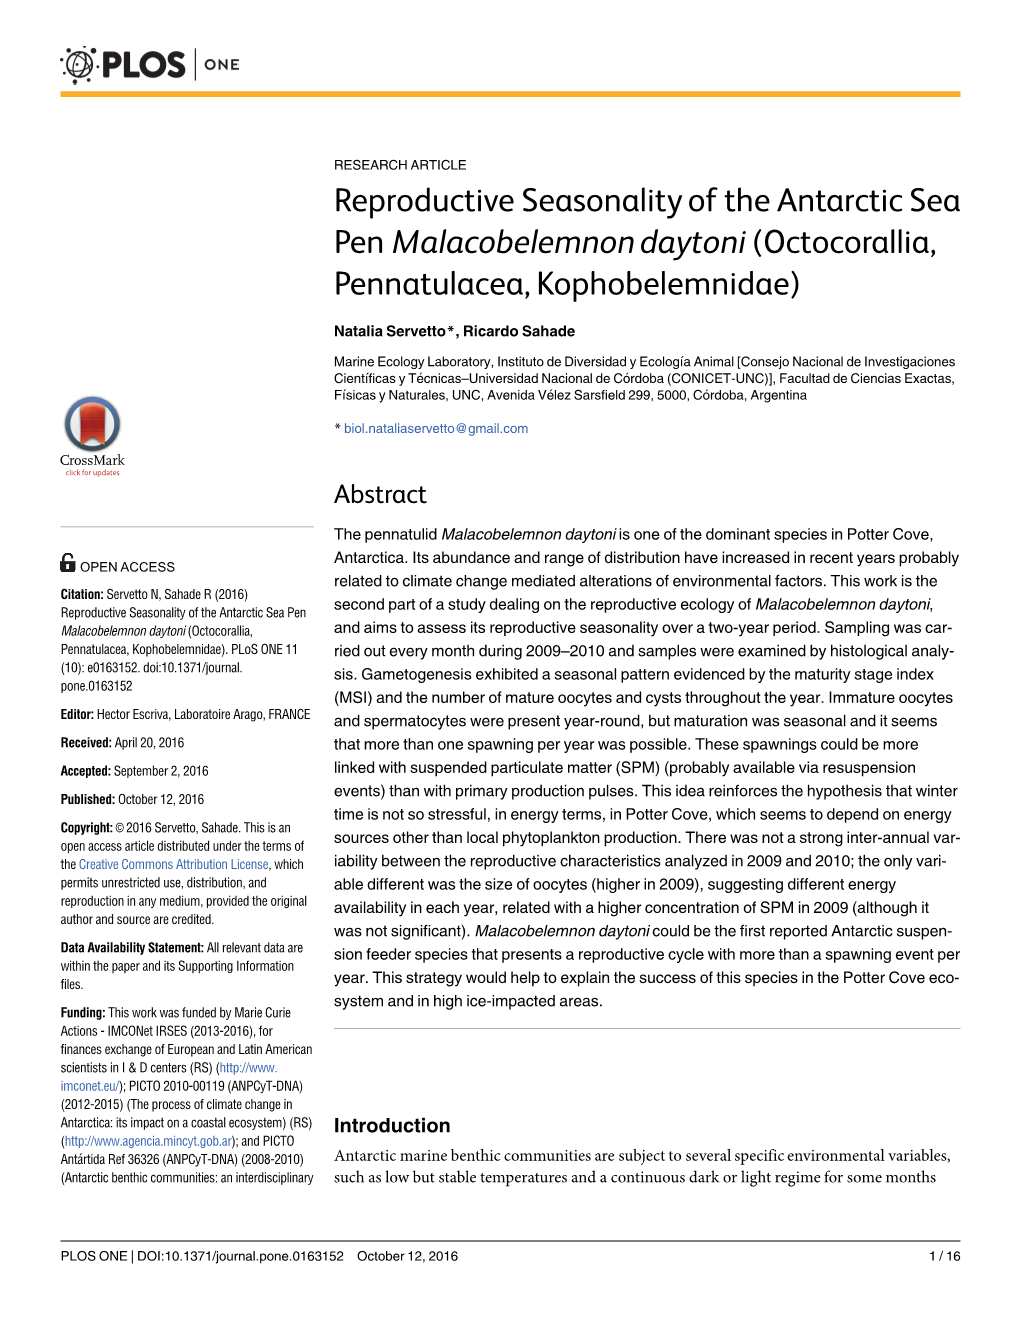 Reproductive Seasonality of the Antarctic Sea Pen Malacobelemnon Daytoni (Octocorallia, Pennatulacea, Kophobelemnidae)